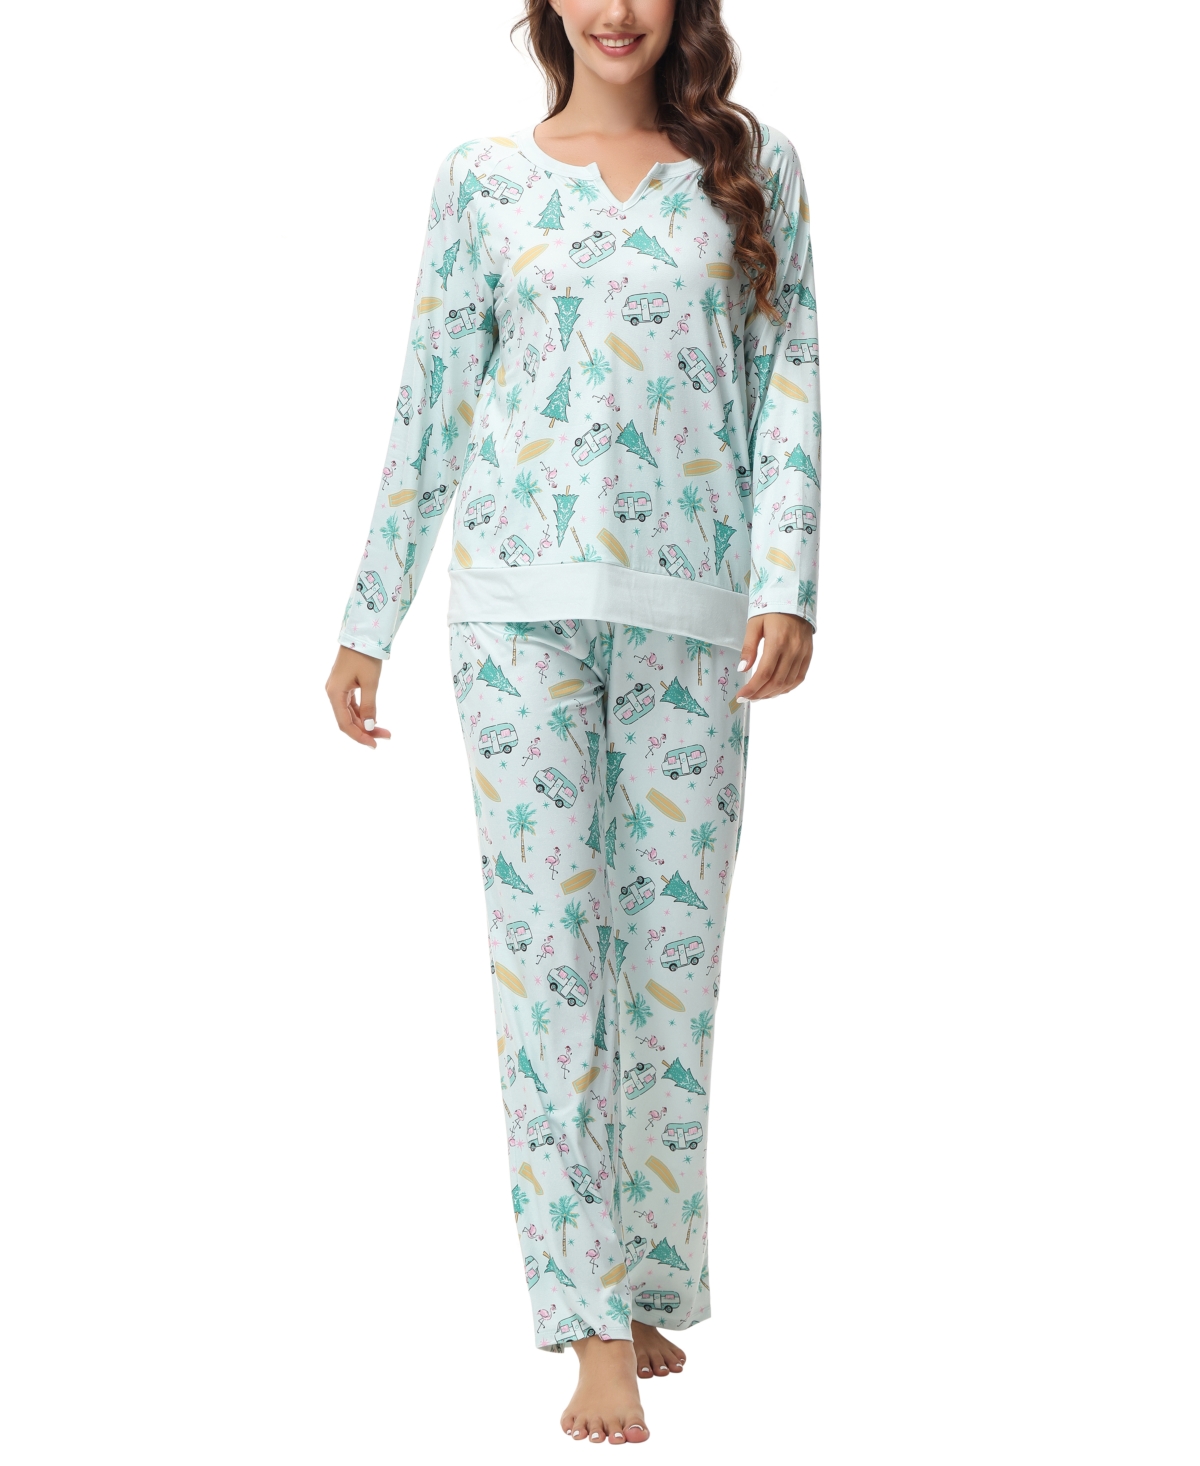 Women's 2-Pc. Long-Sleeve Notched-Collar Pajamas Set